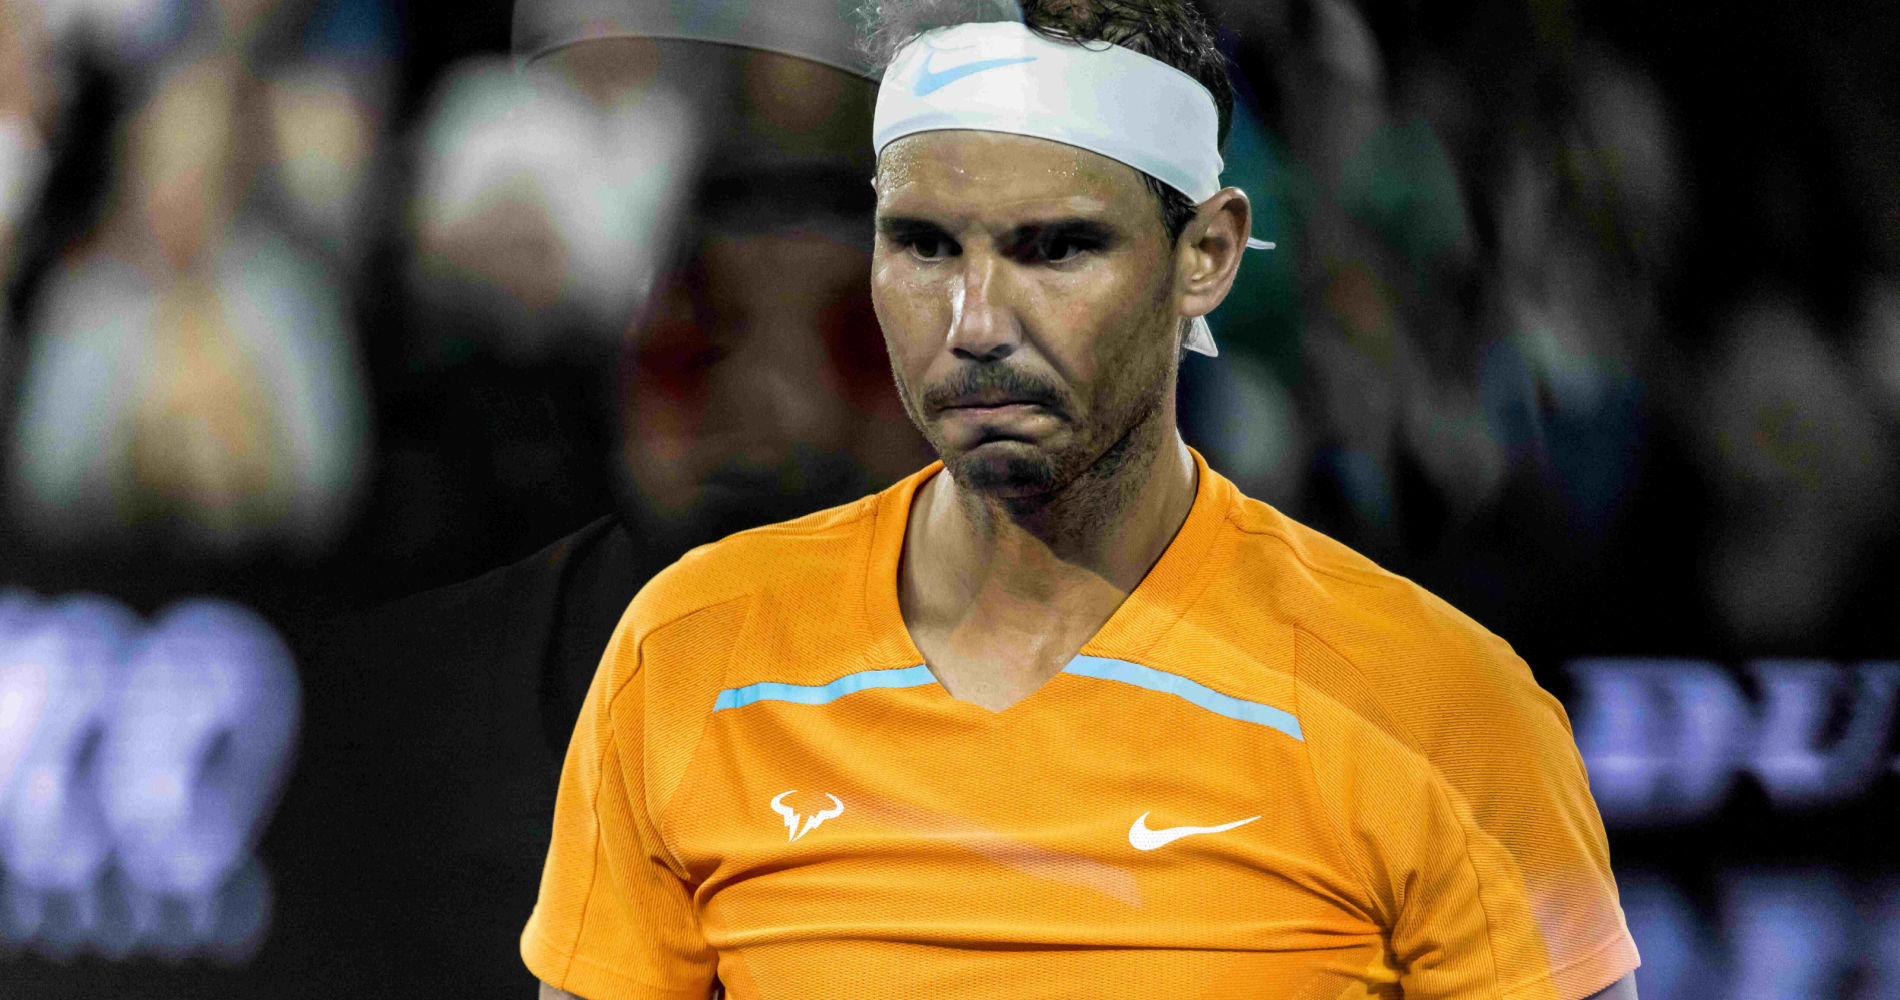 Rafael Nadal at the 2023 Australian Open